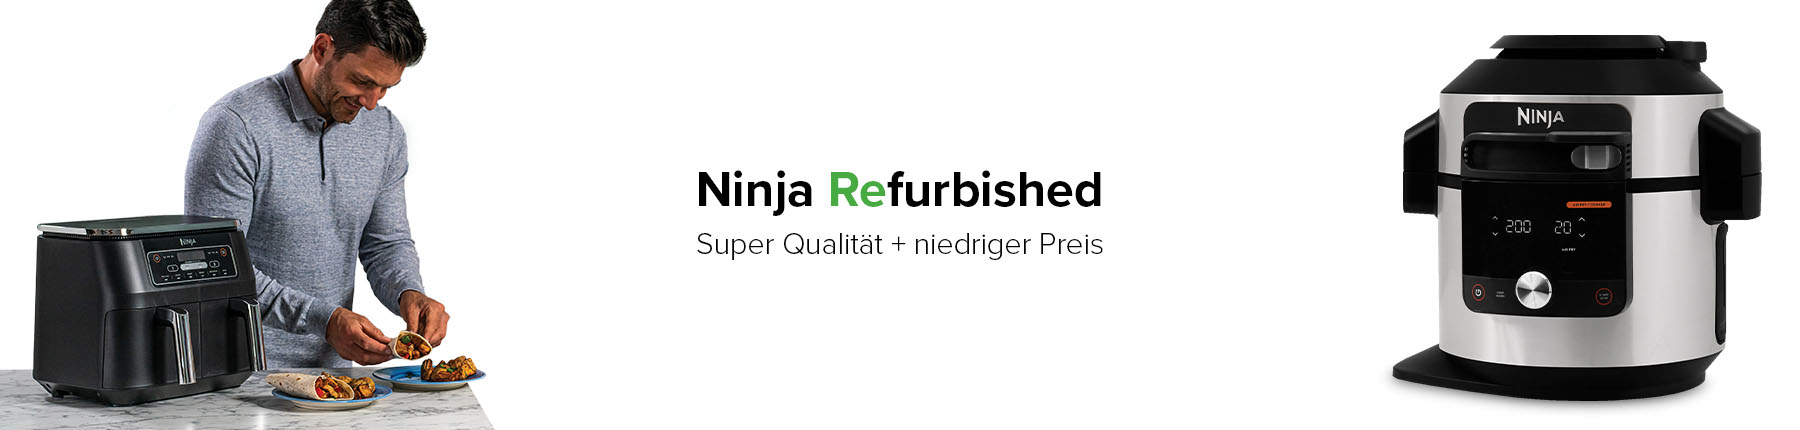 Ninja Refurbished